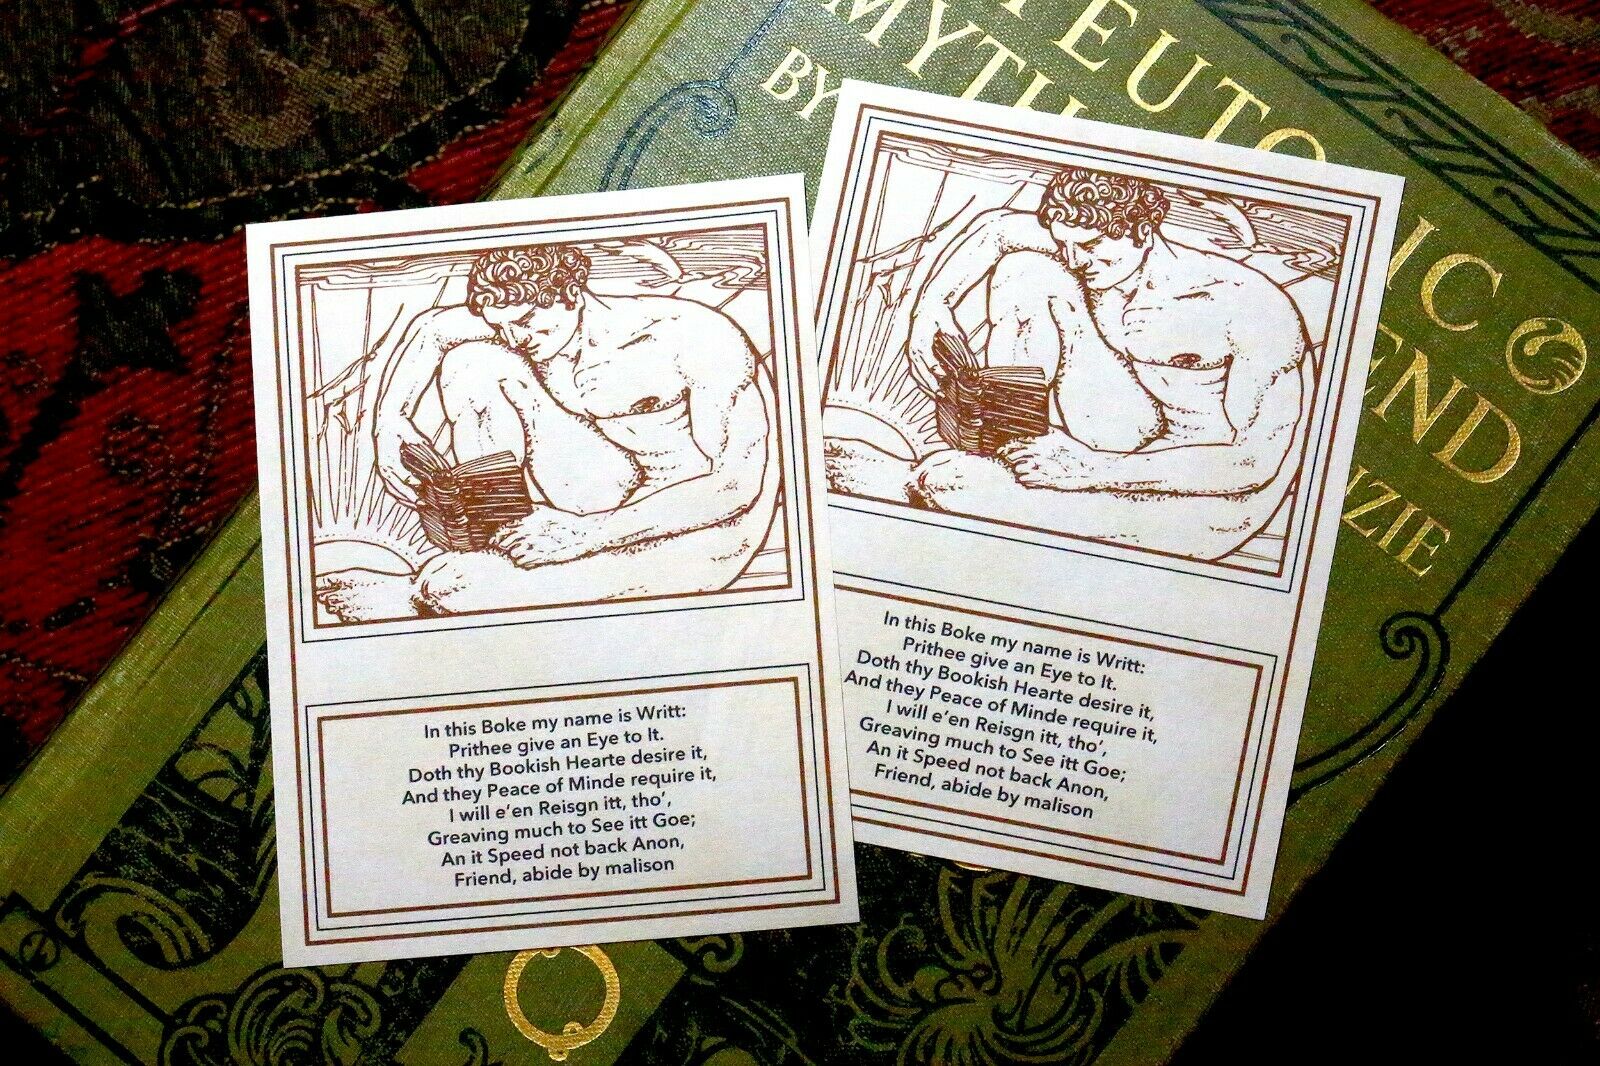 Seashore Adonis, Erotic Ex-Libris Bookplates, Crafted on Gummed Paper, 30pcs